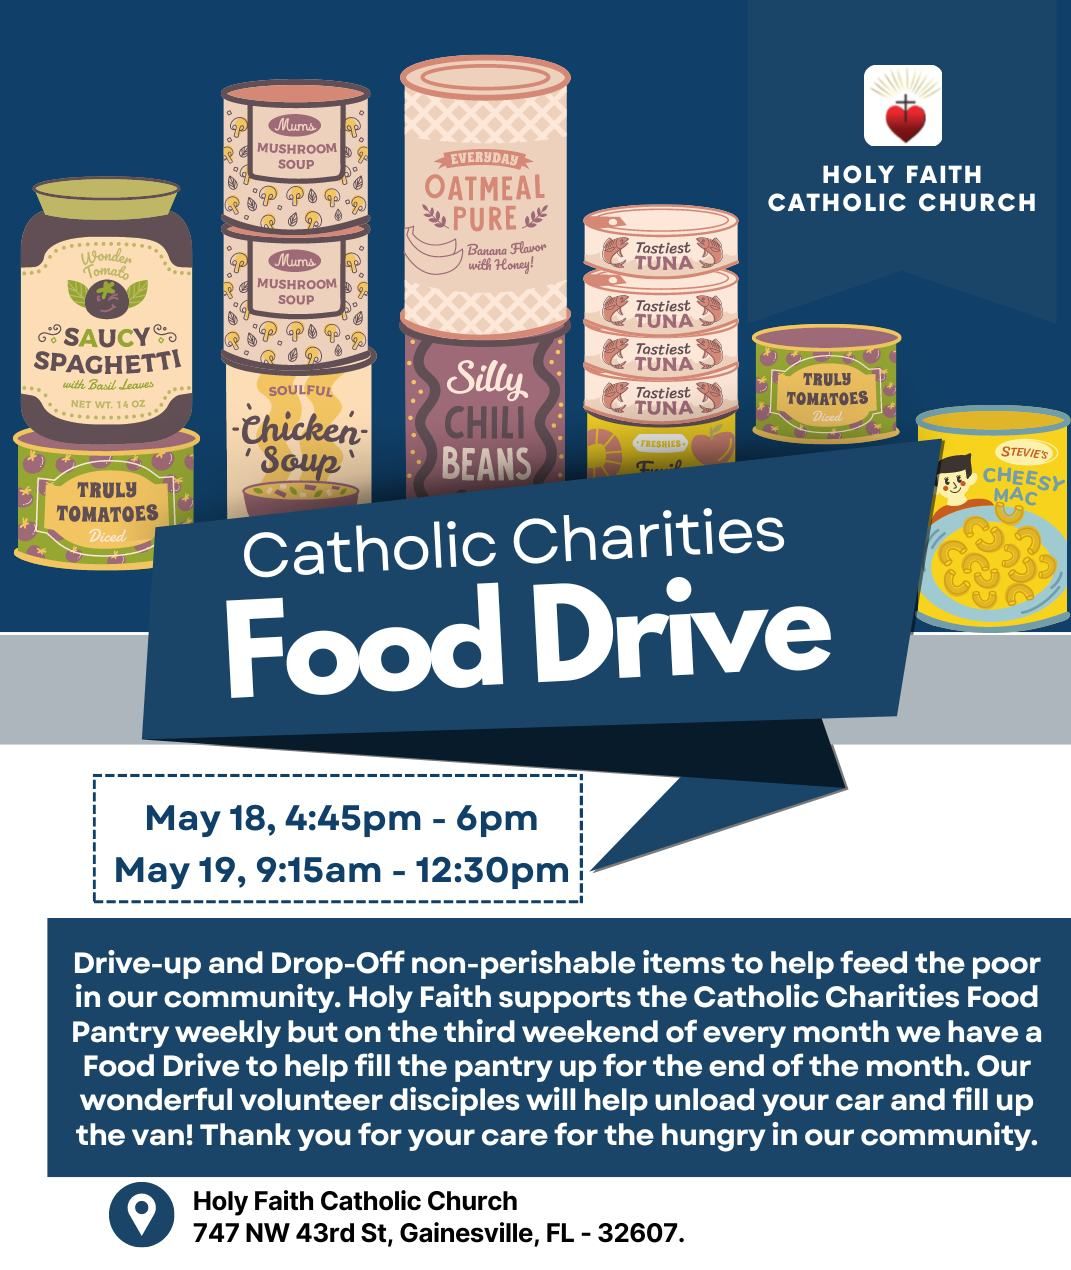 Catholic Charities Food Drive at Holy Faith